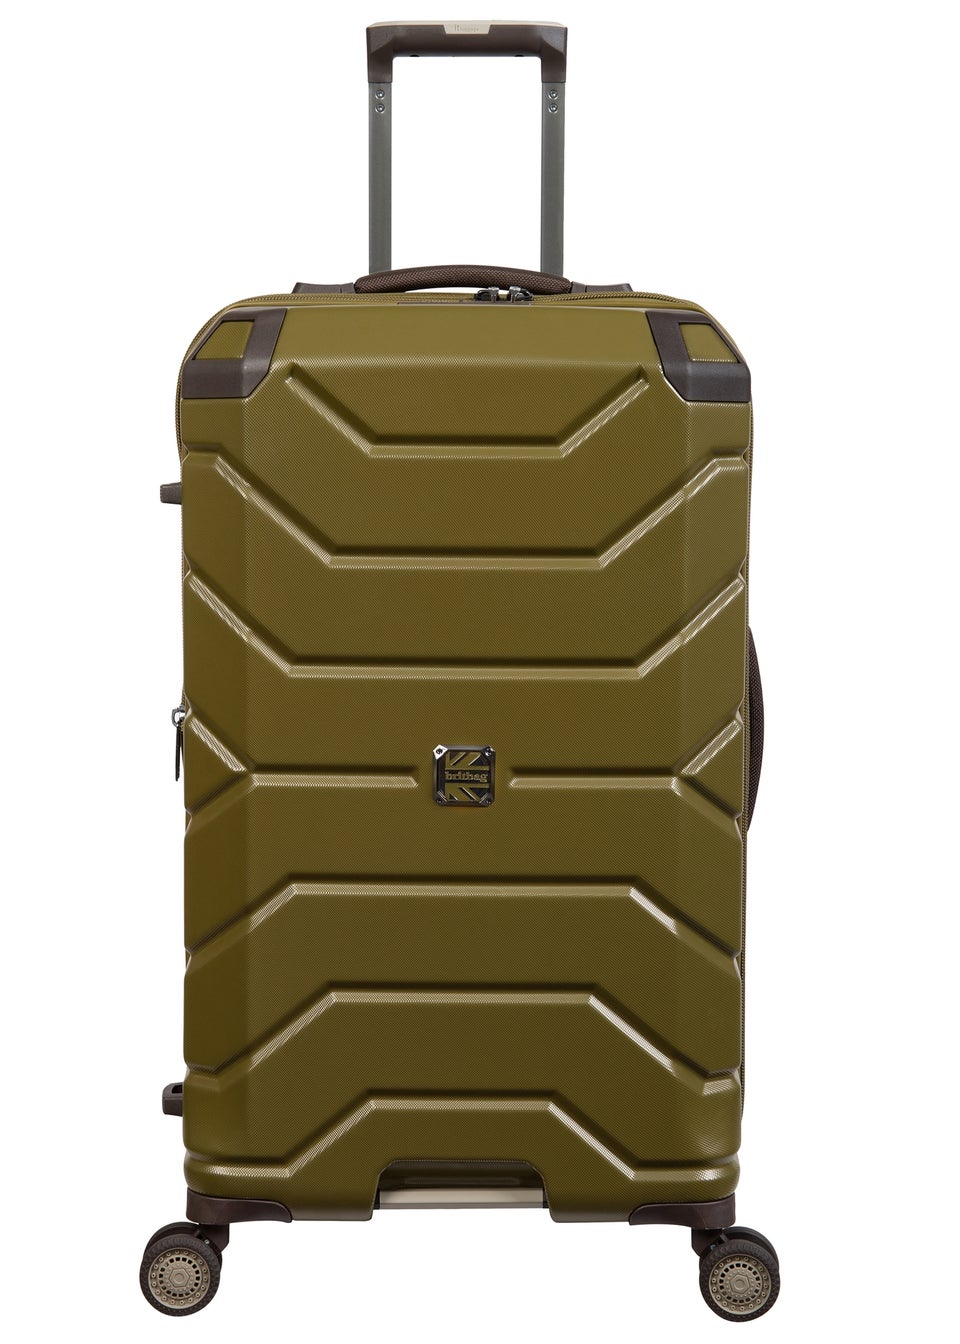 BritBag Galloway Olive Nut Medium Suitcase with TSA Lock